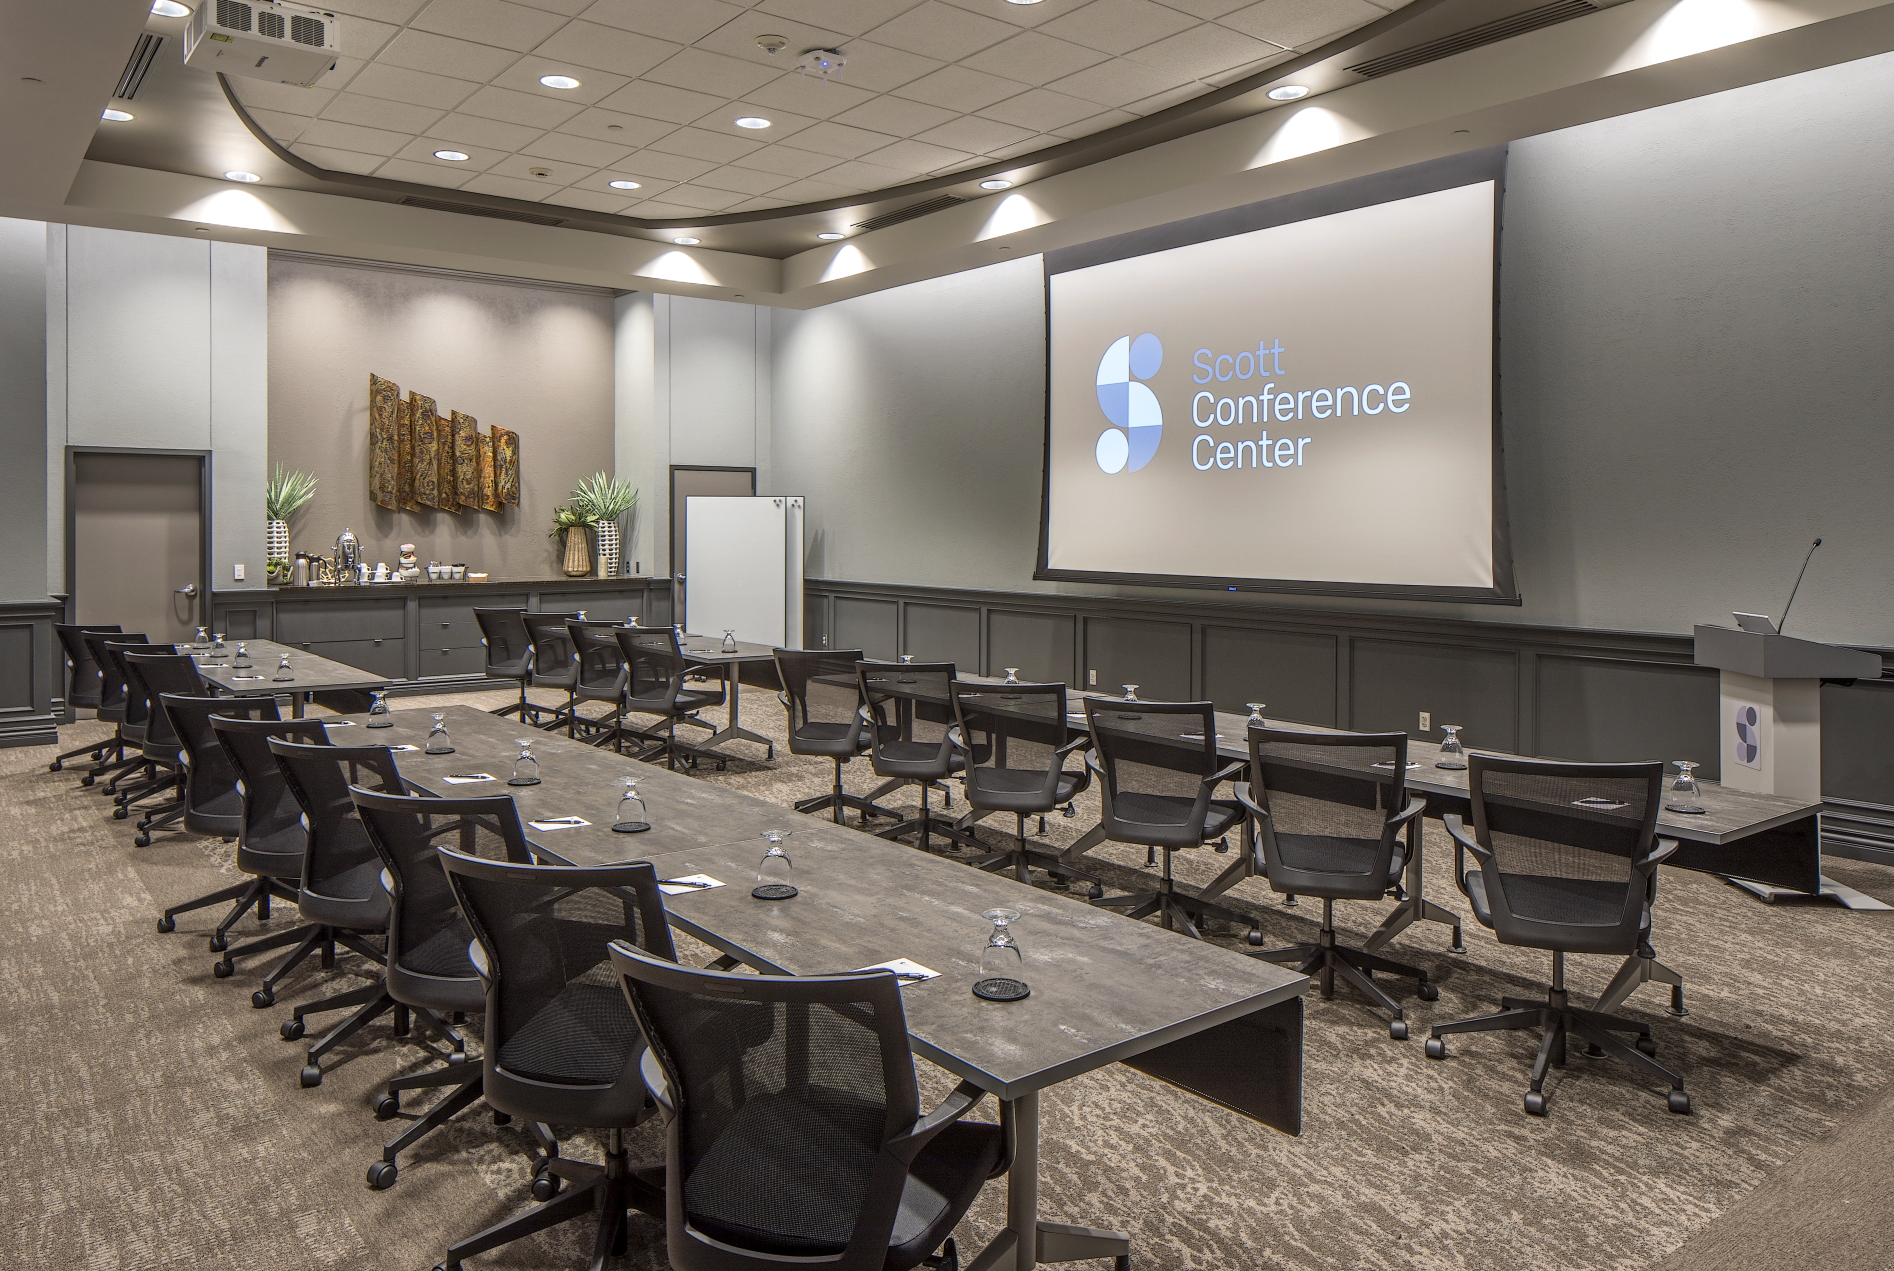 Scott Conference Center - Boardroom Classroom